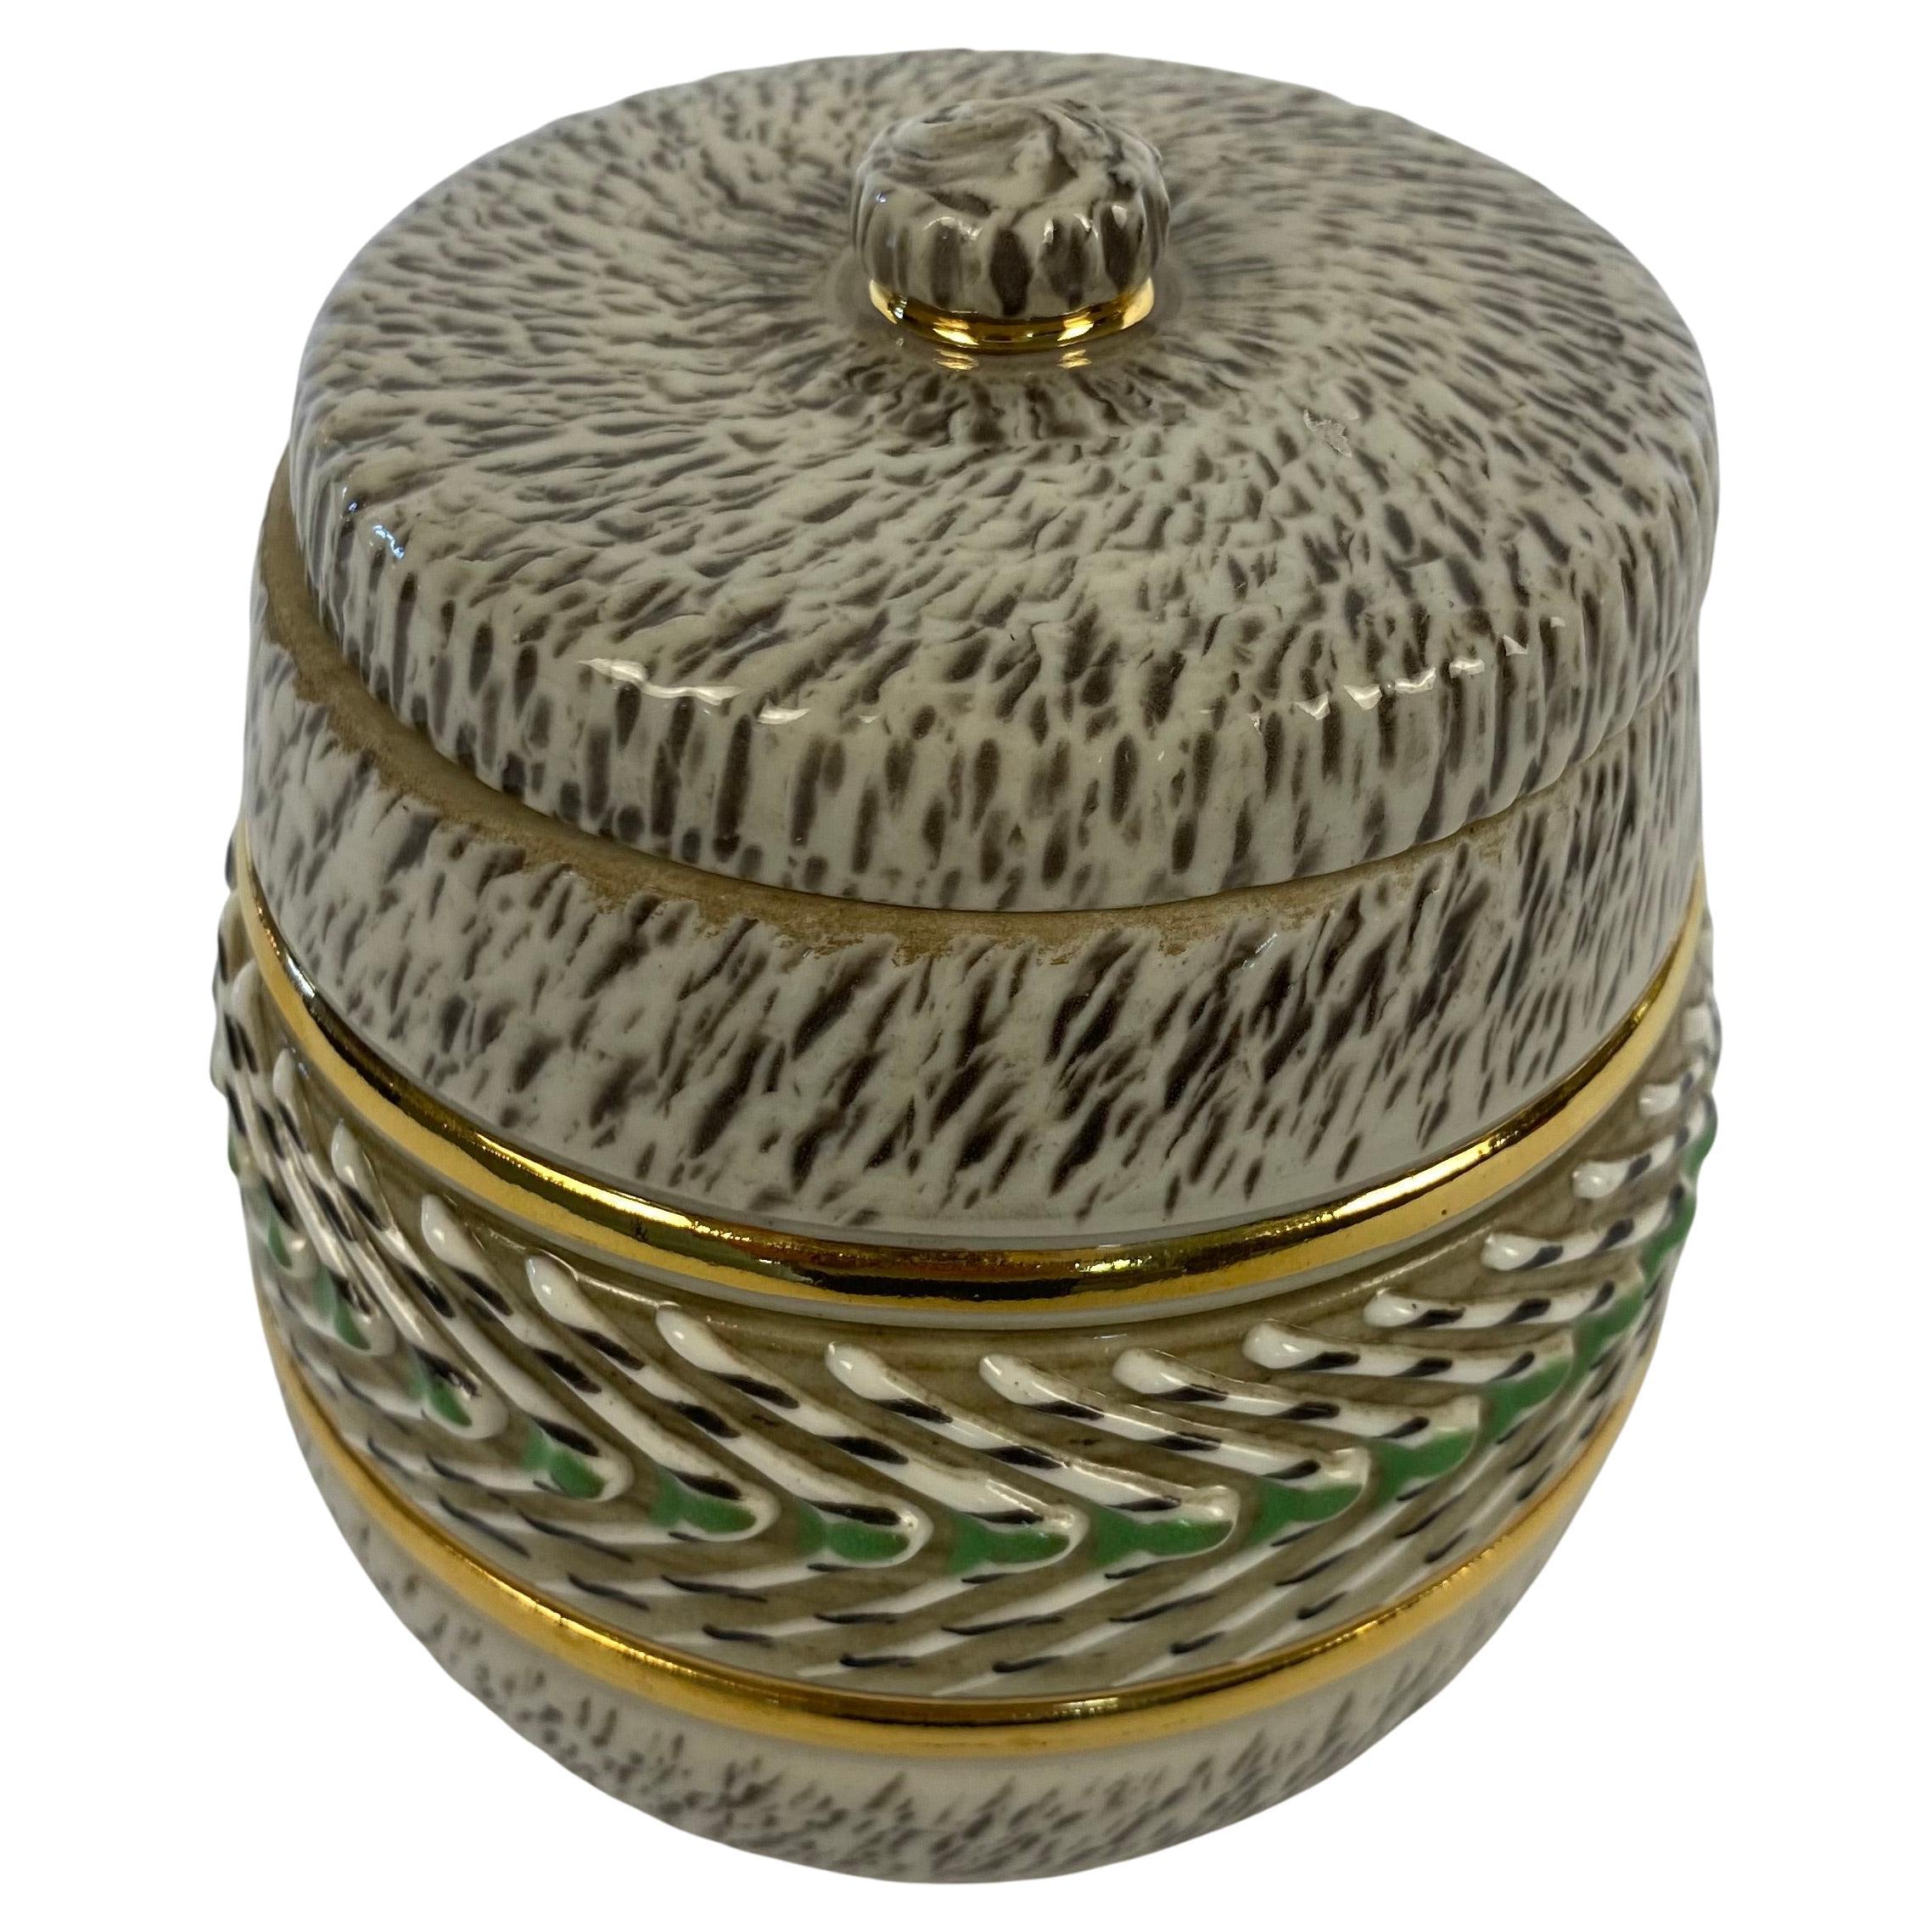 French Ceramic Tobacco Pot or Ceramic Lidded Jewelry Box Signed Lucien Brisdoux